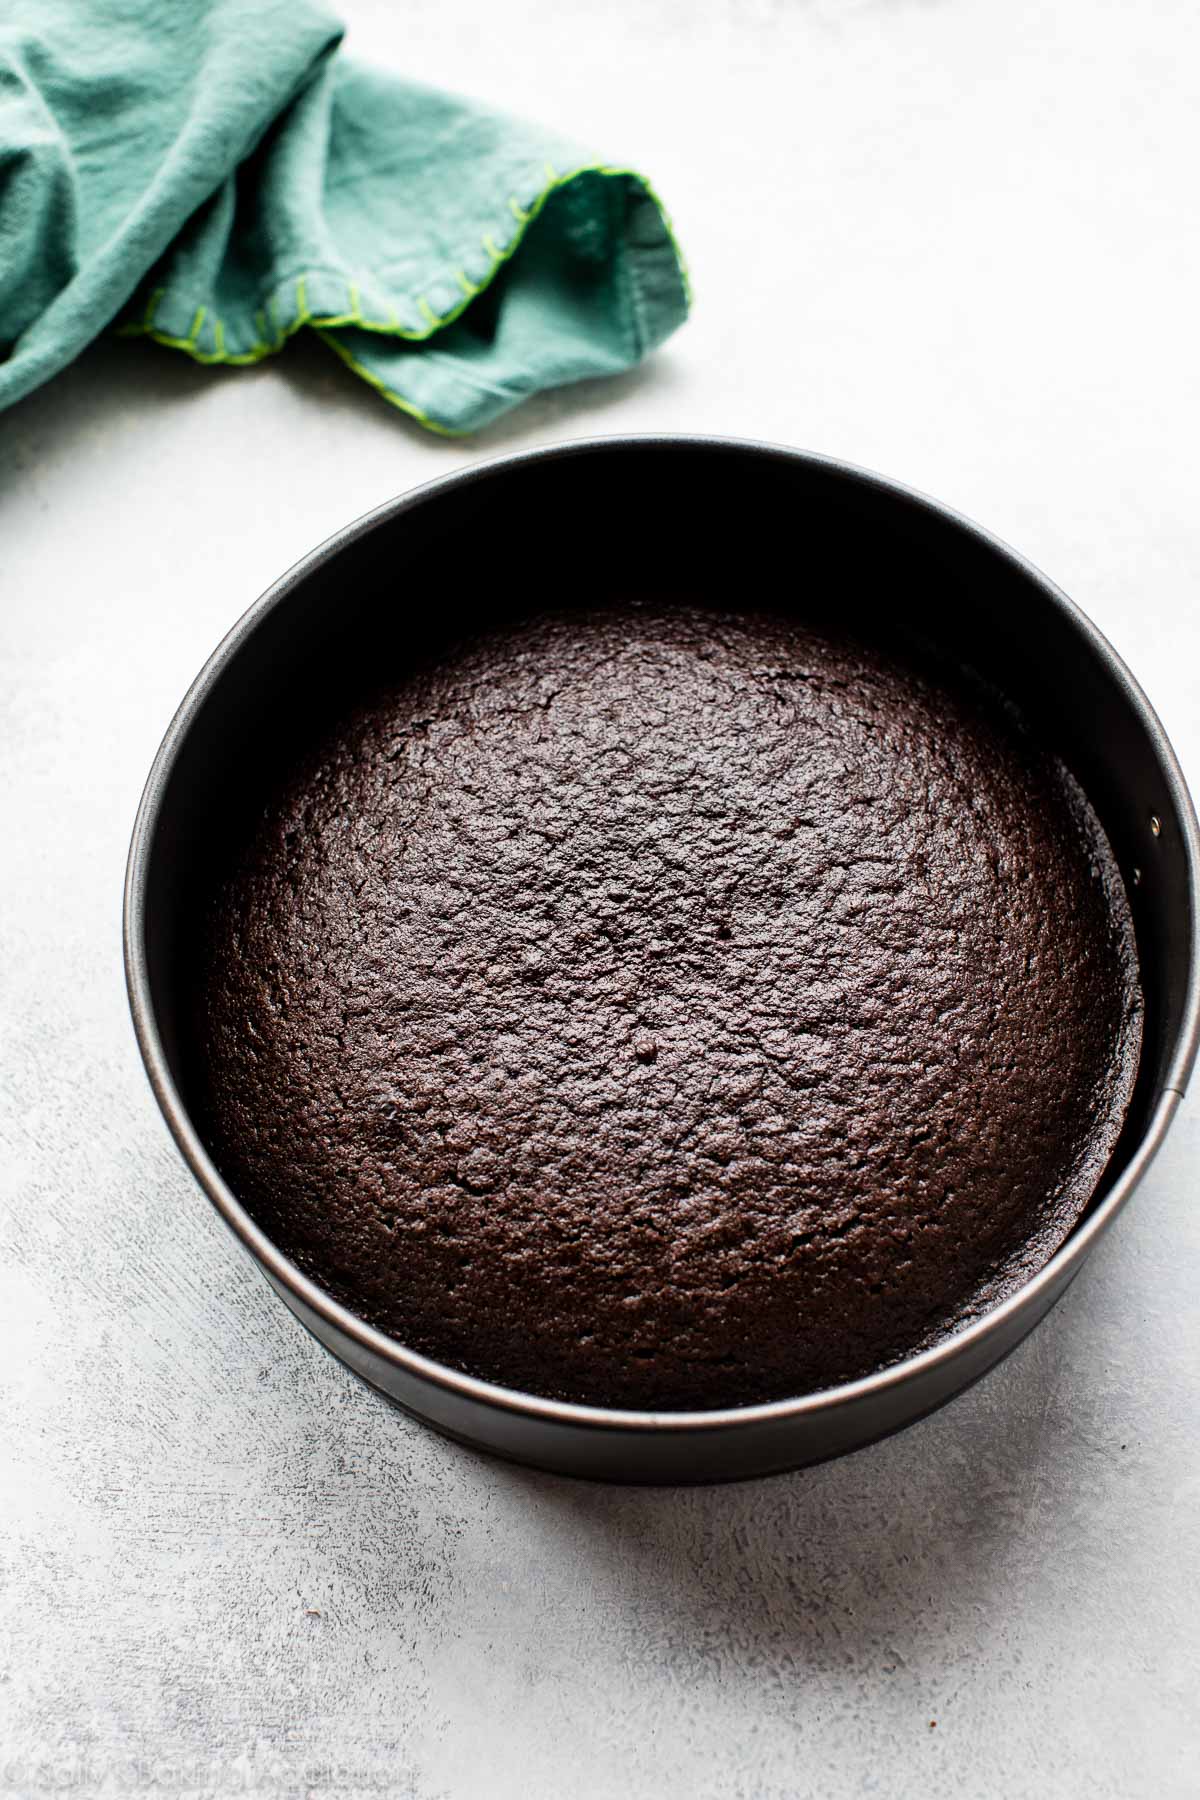 chocolate cake in a baking pan after baking